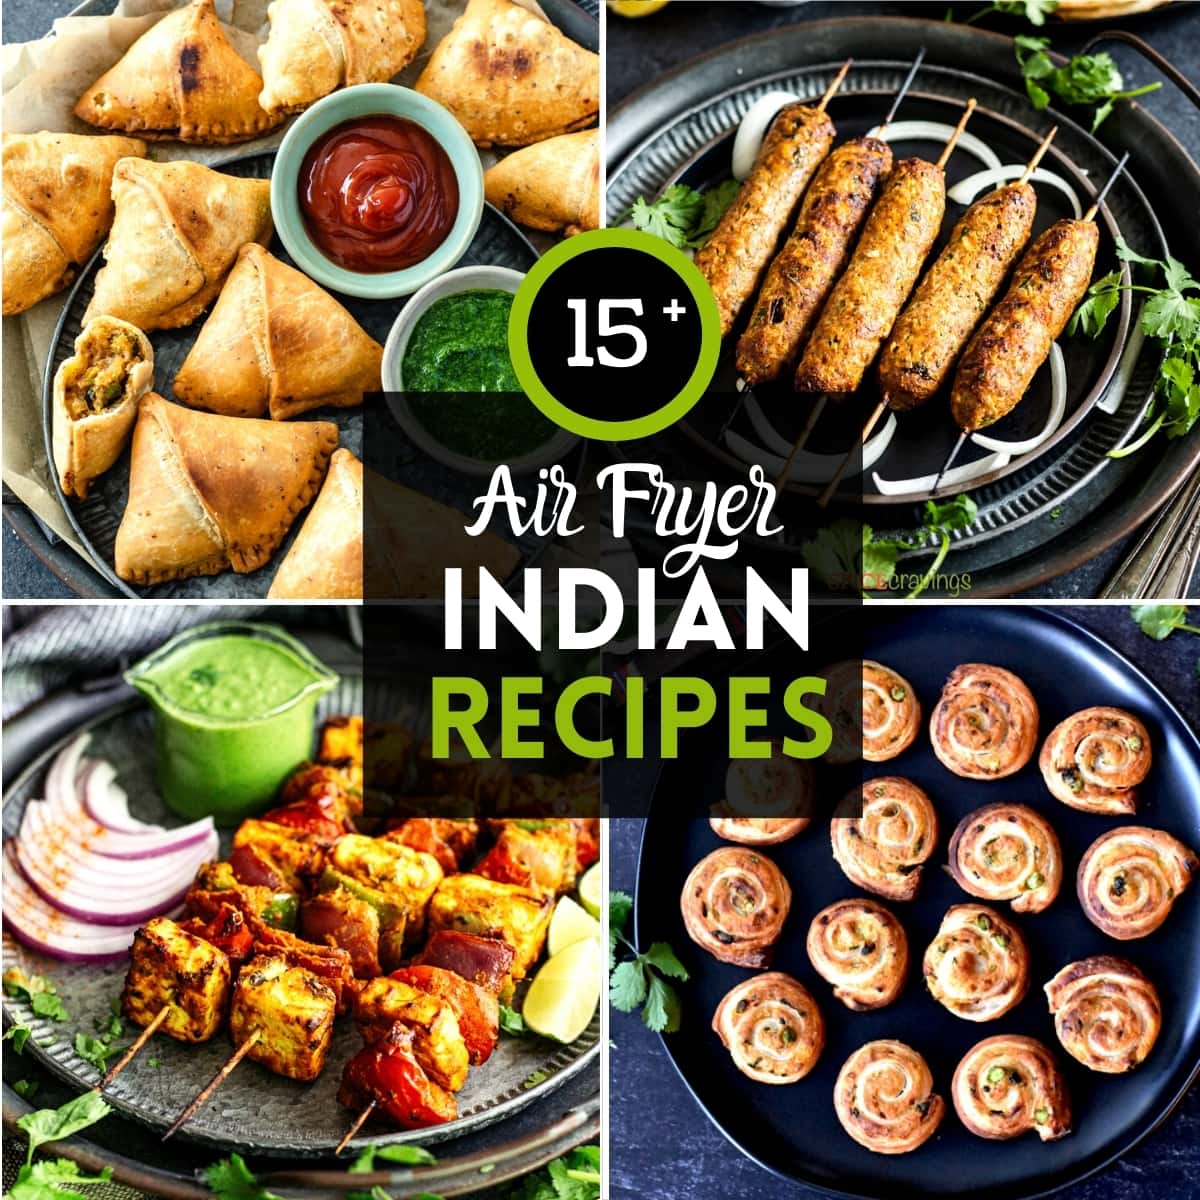 https://spicecravings.com/wp-content/uploads/2021/03/Air-Fryer-Indian-Recipes-Featured.jpg